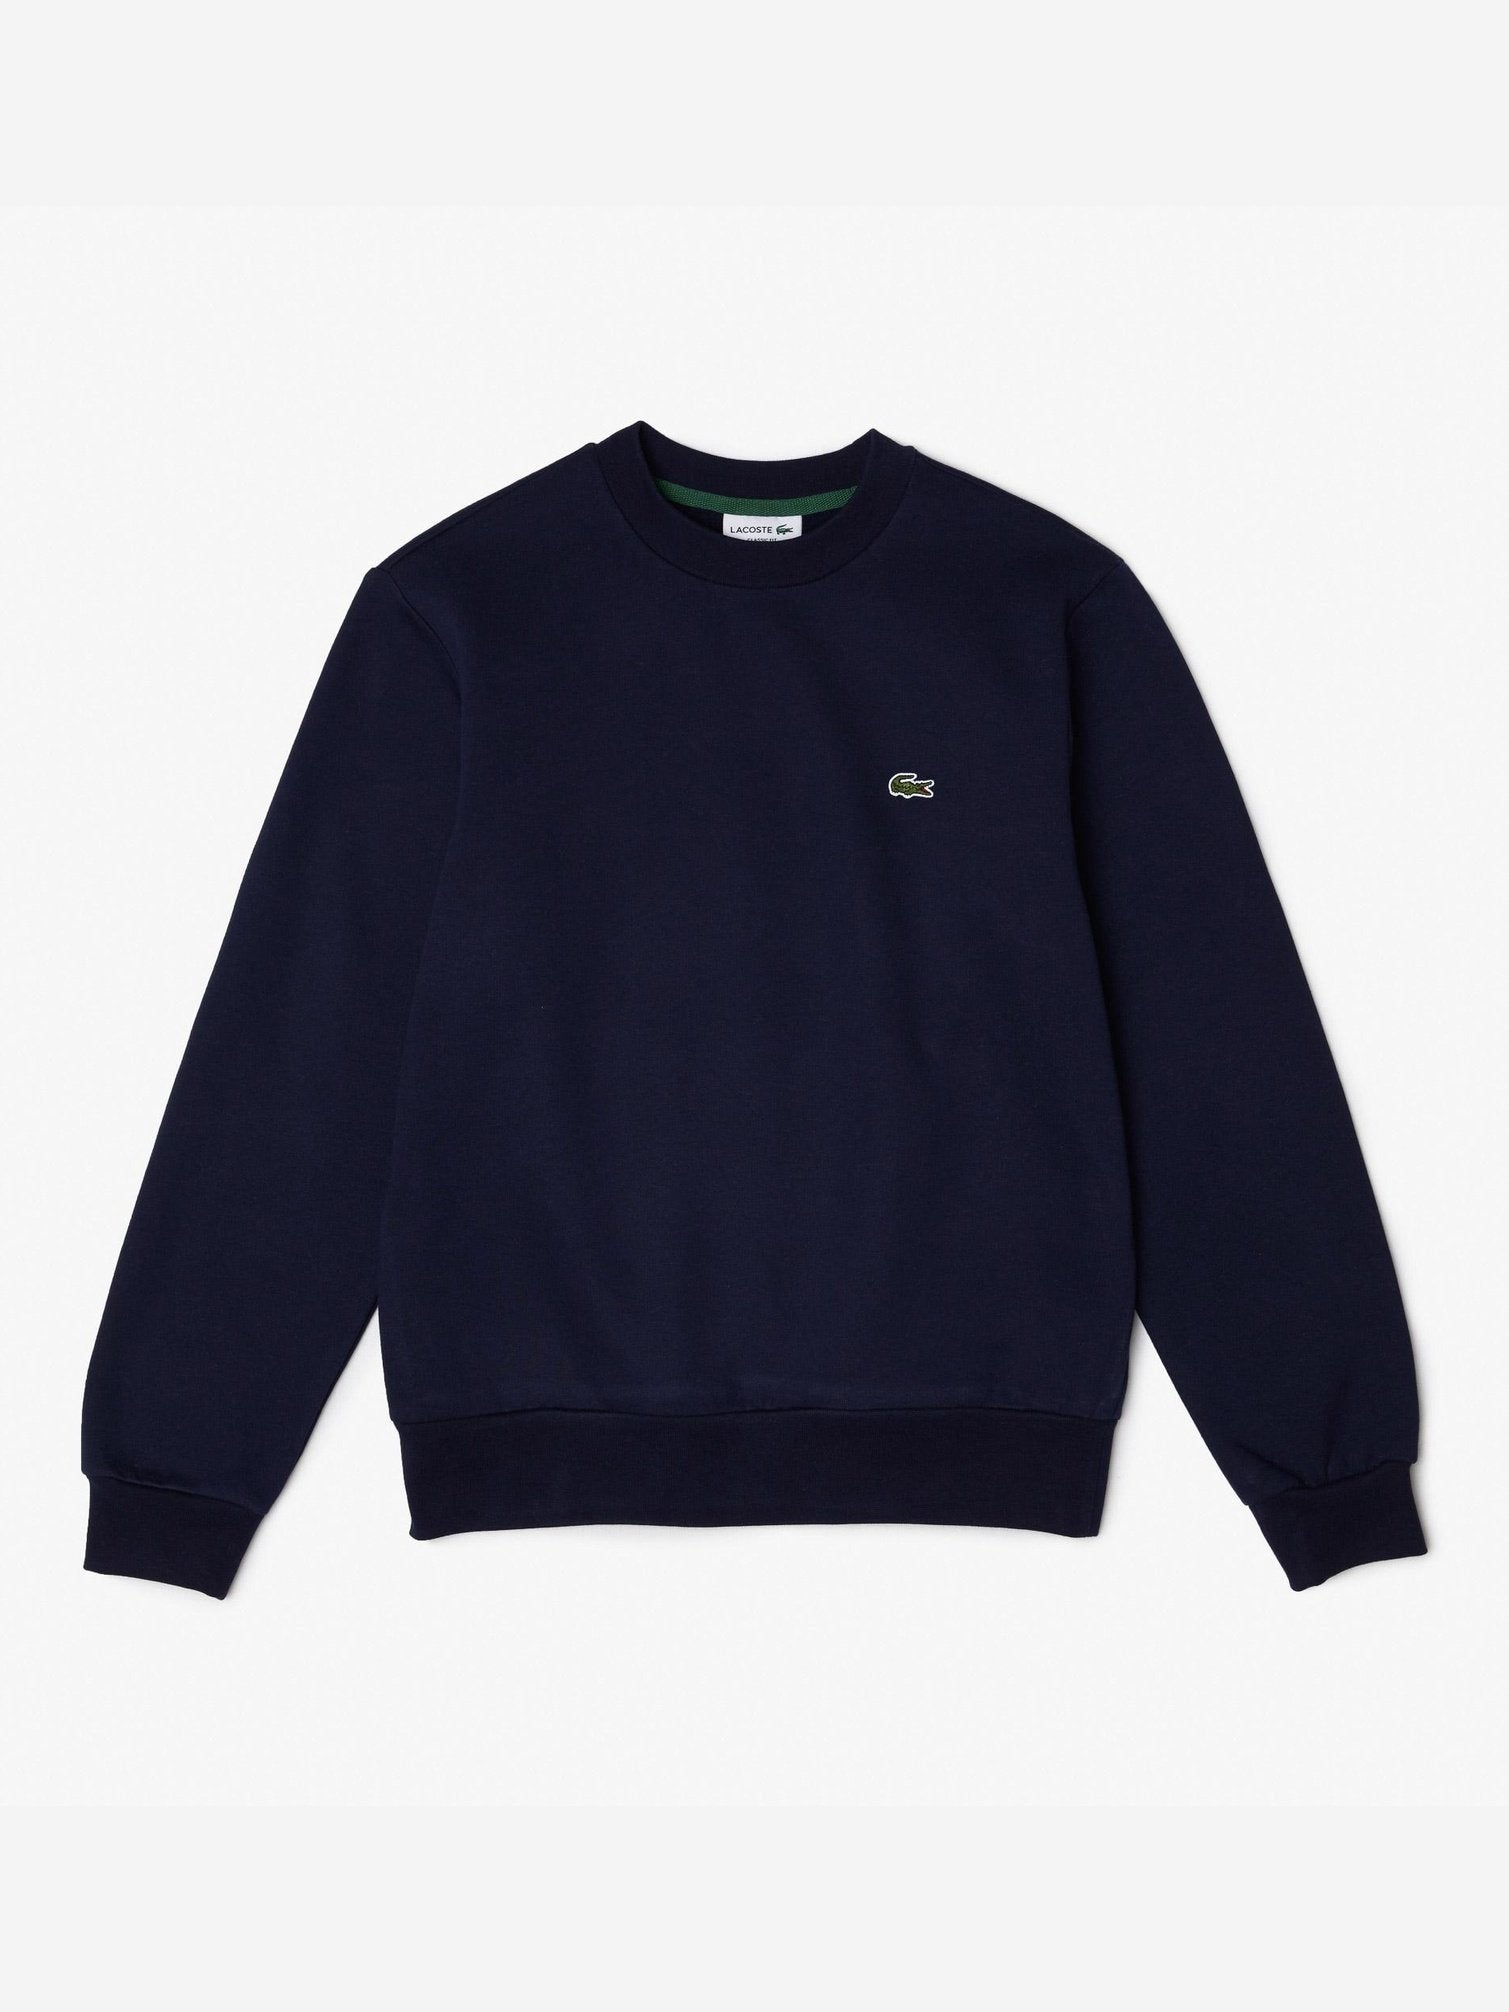 Lacoste Men's Organic Brushed Cotton Sweatshirt Navy Blue SH9608 166